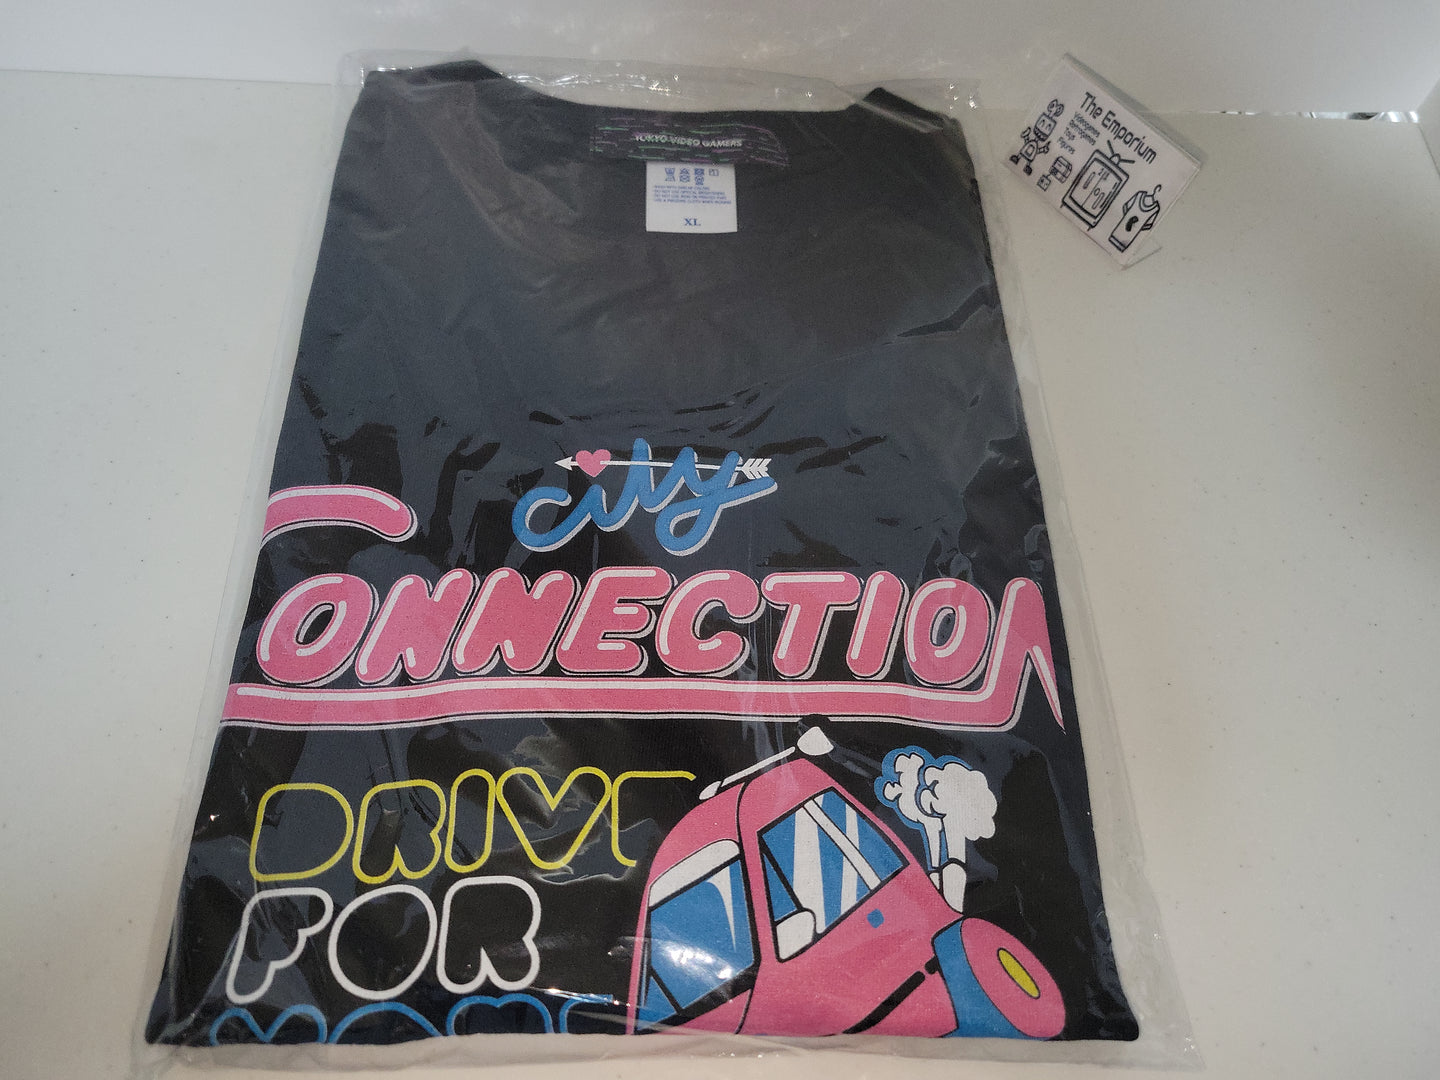 City Connection T-shirt -Black- XL Size - clothing shirts apparel